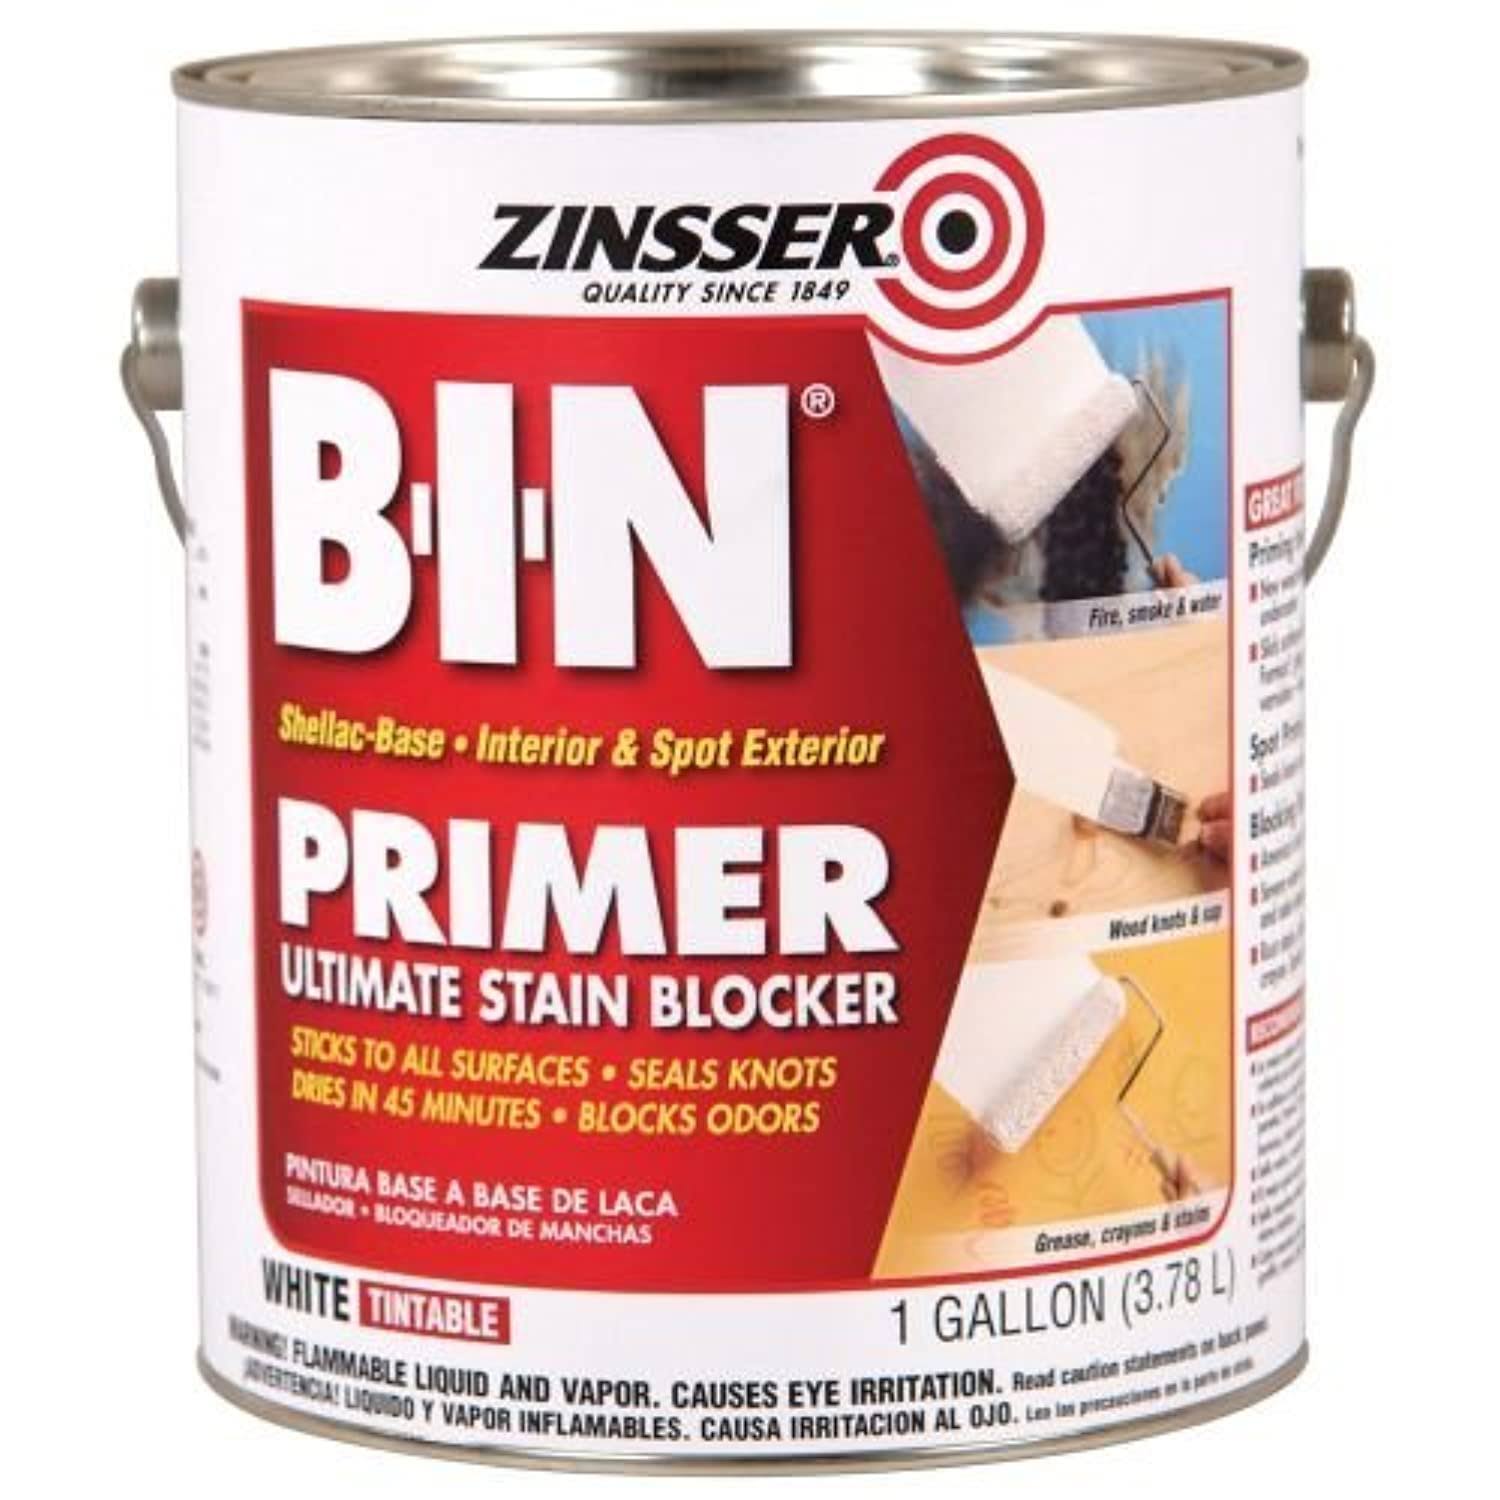 Zinsser B-I-N Shellac-Base Primer - White, 3.78l